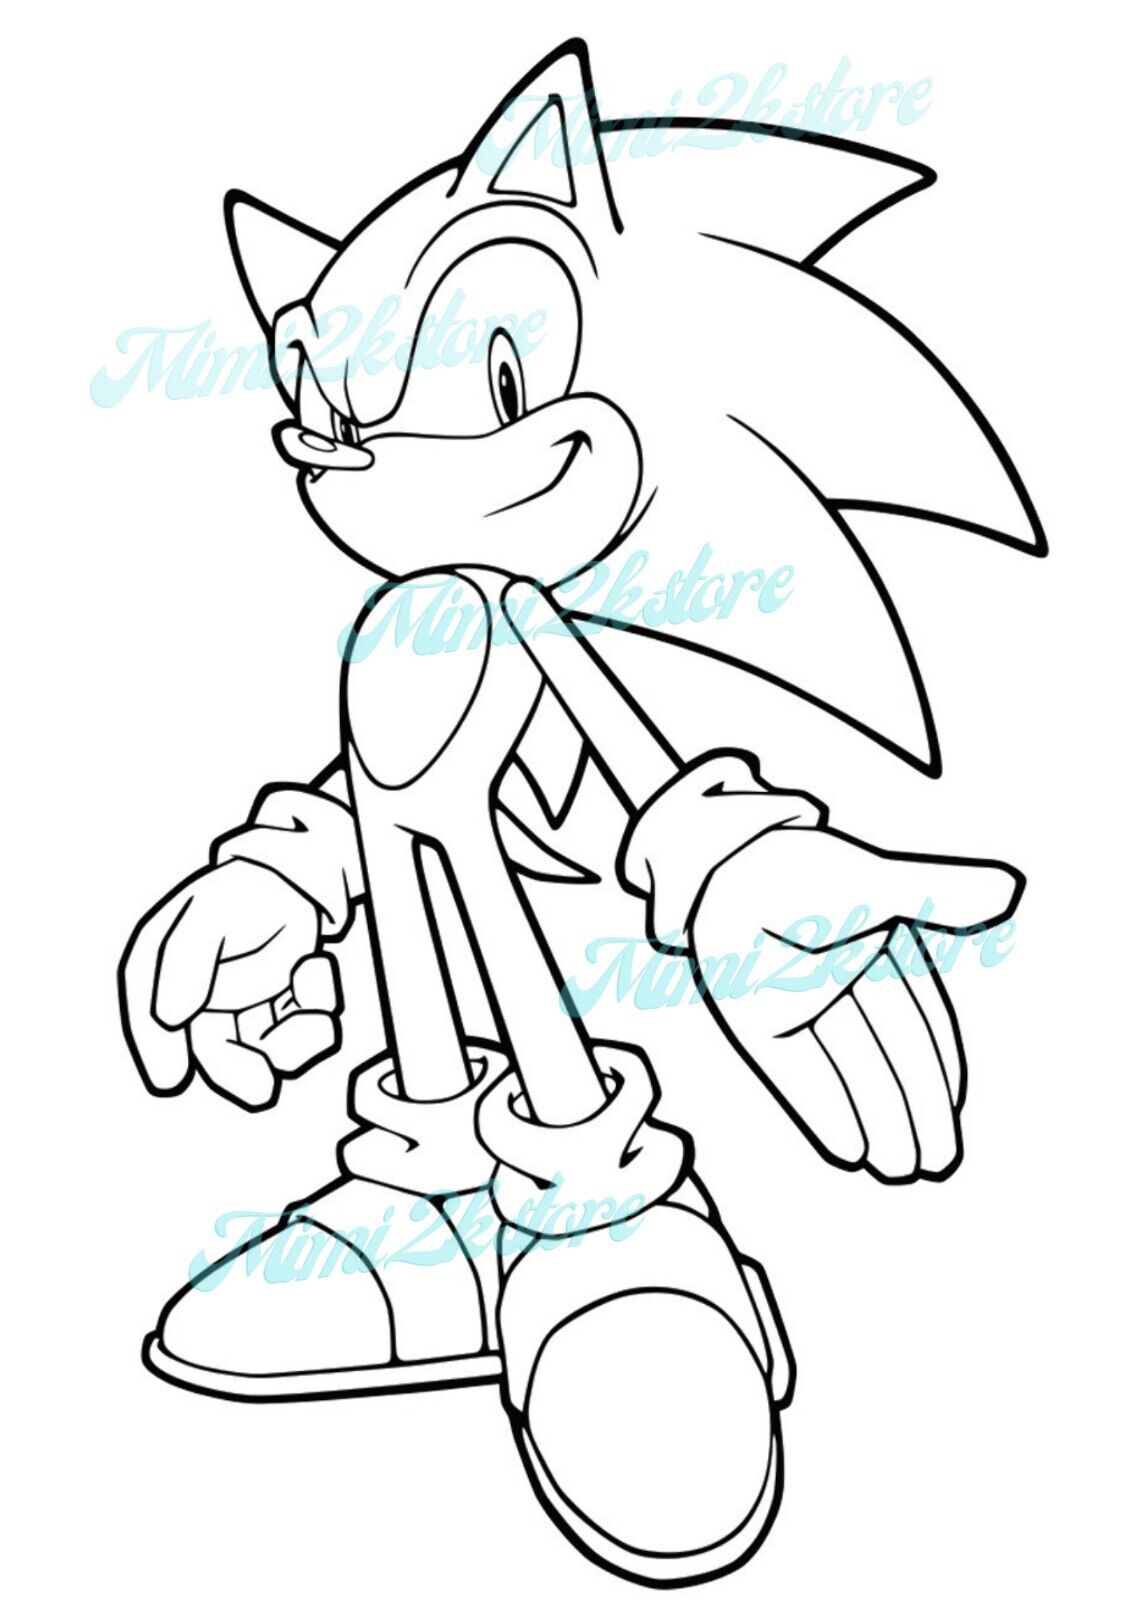 Sonic the hedgehog digital coloring book download ireland